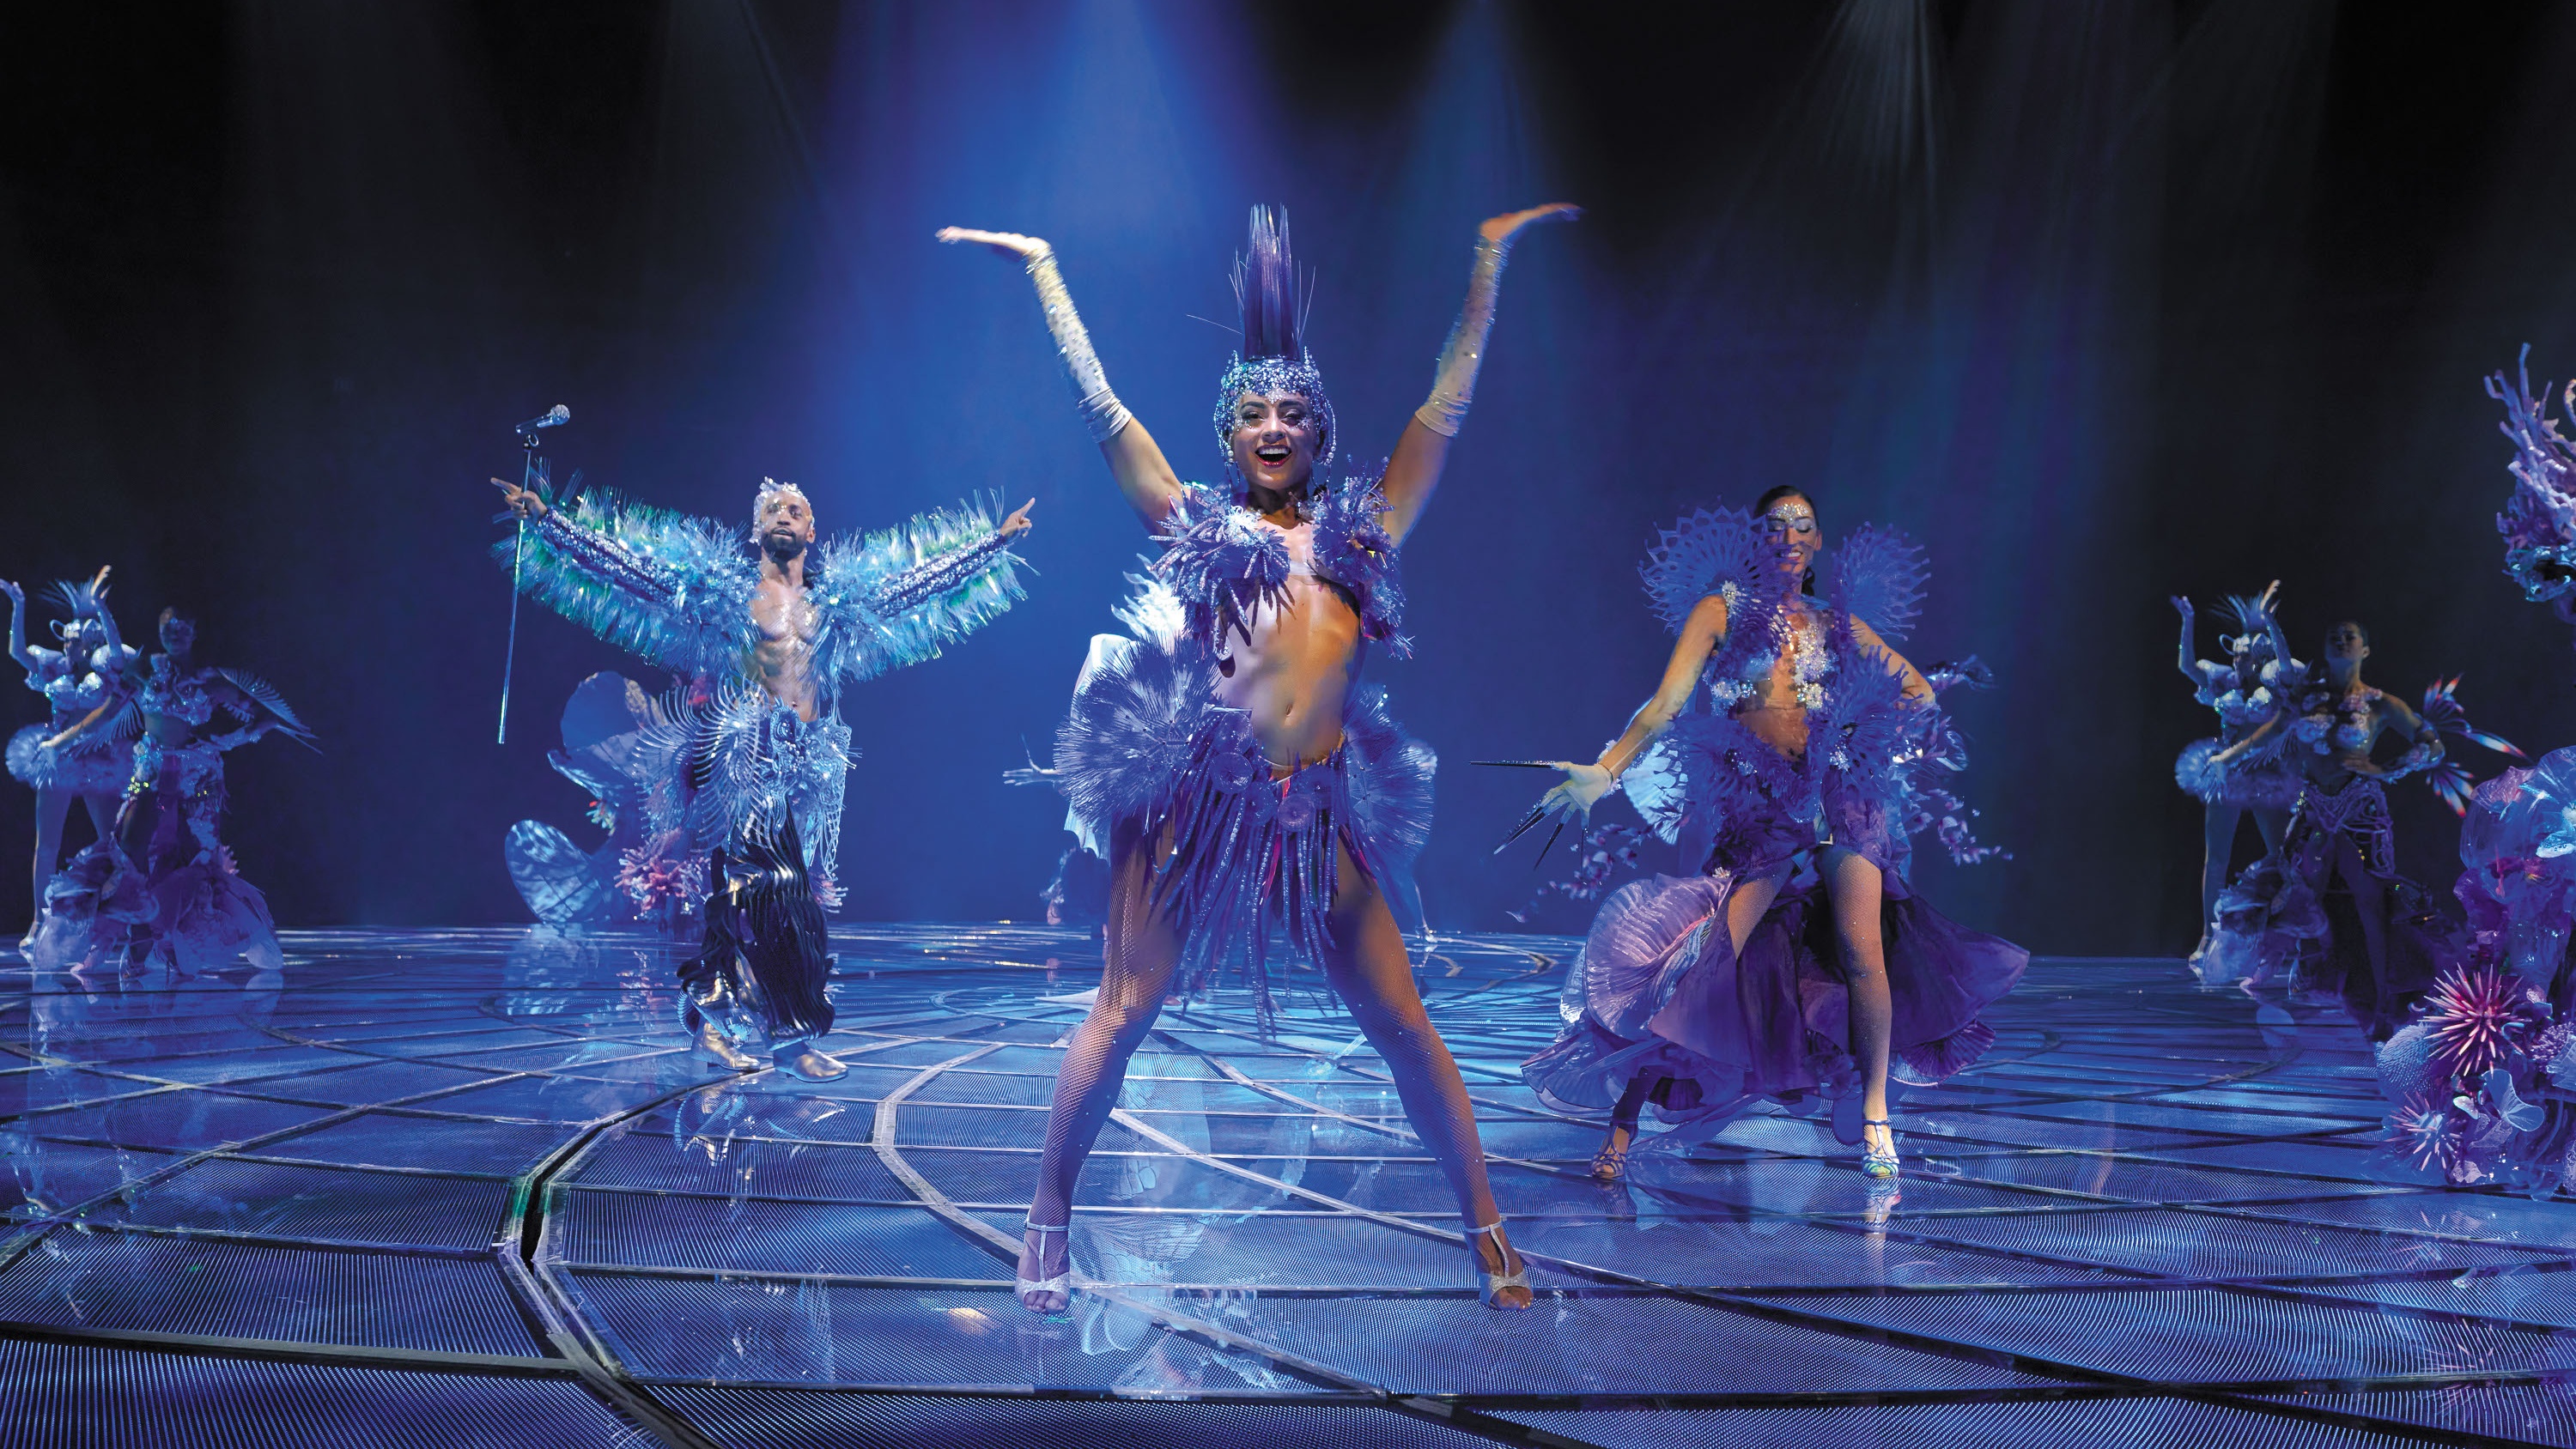 Awakening performers on stage in costume in blue lighting